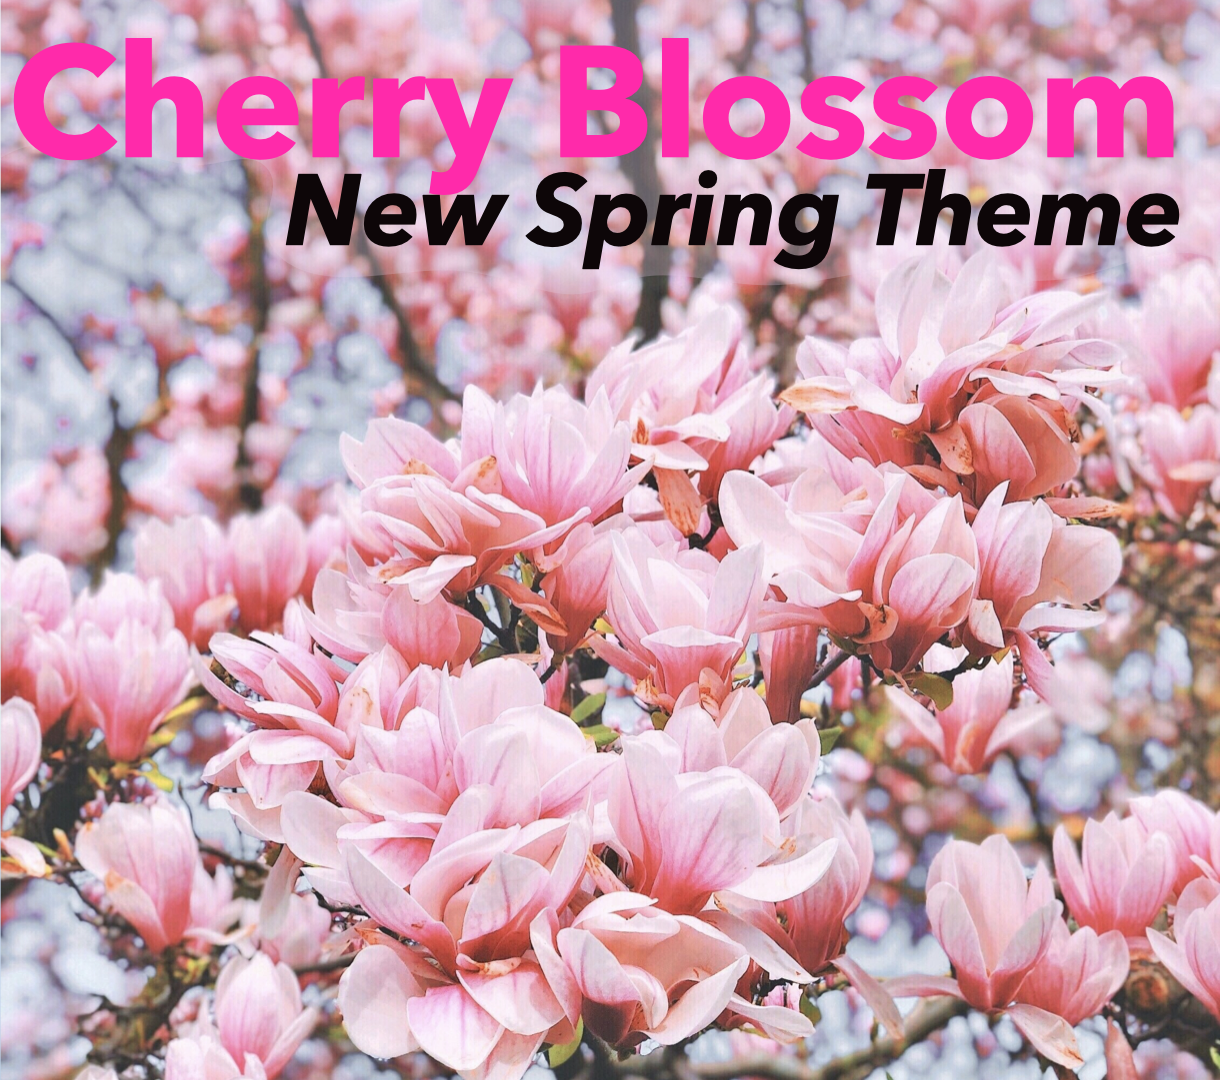 New Spring Theme: Cherry Blossom